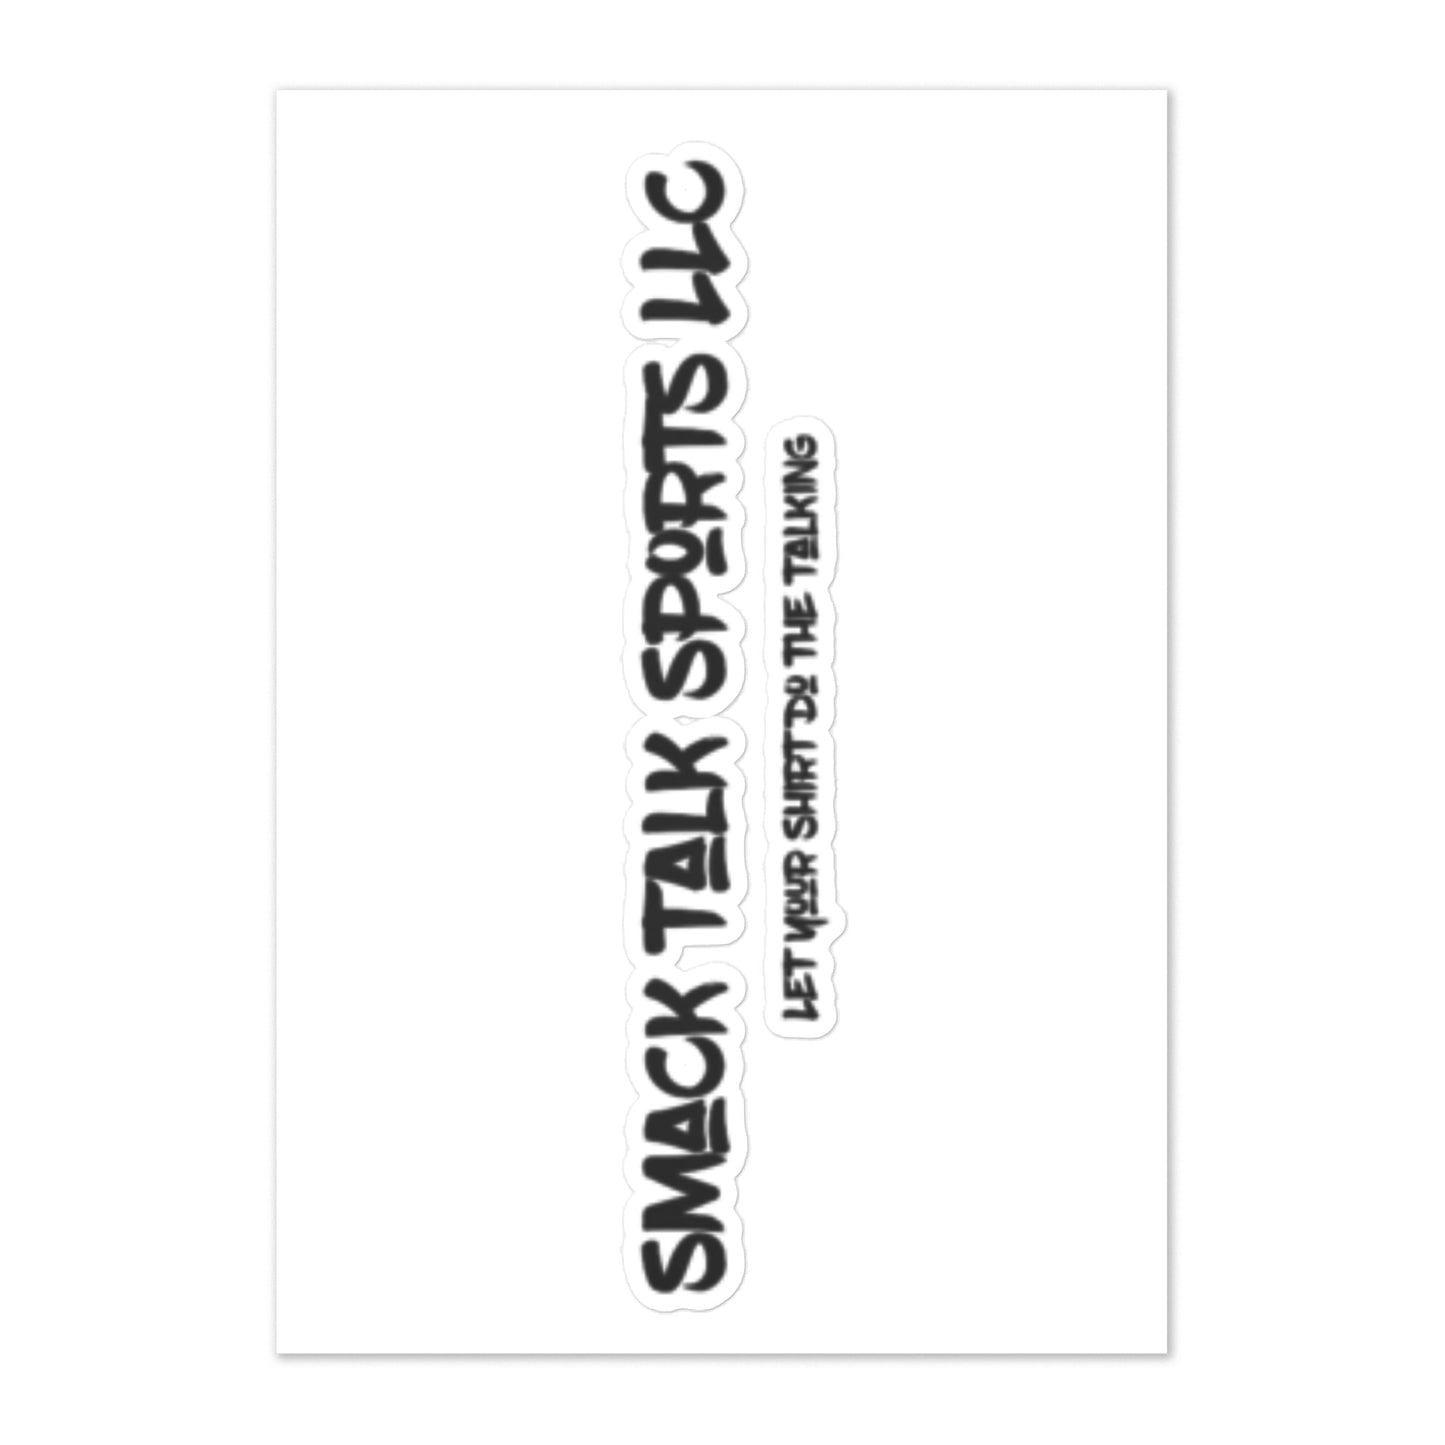 Smack Talk Sports Sticker sheet